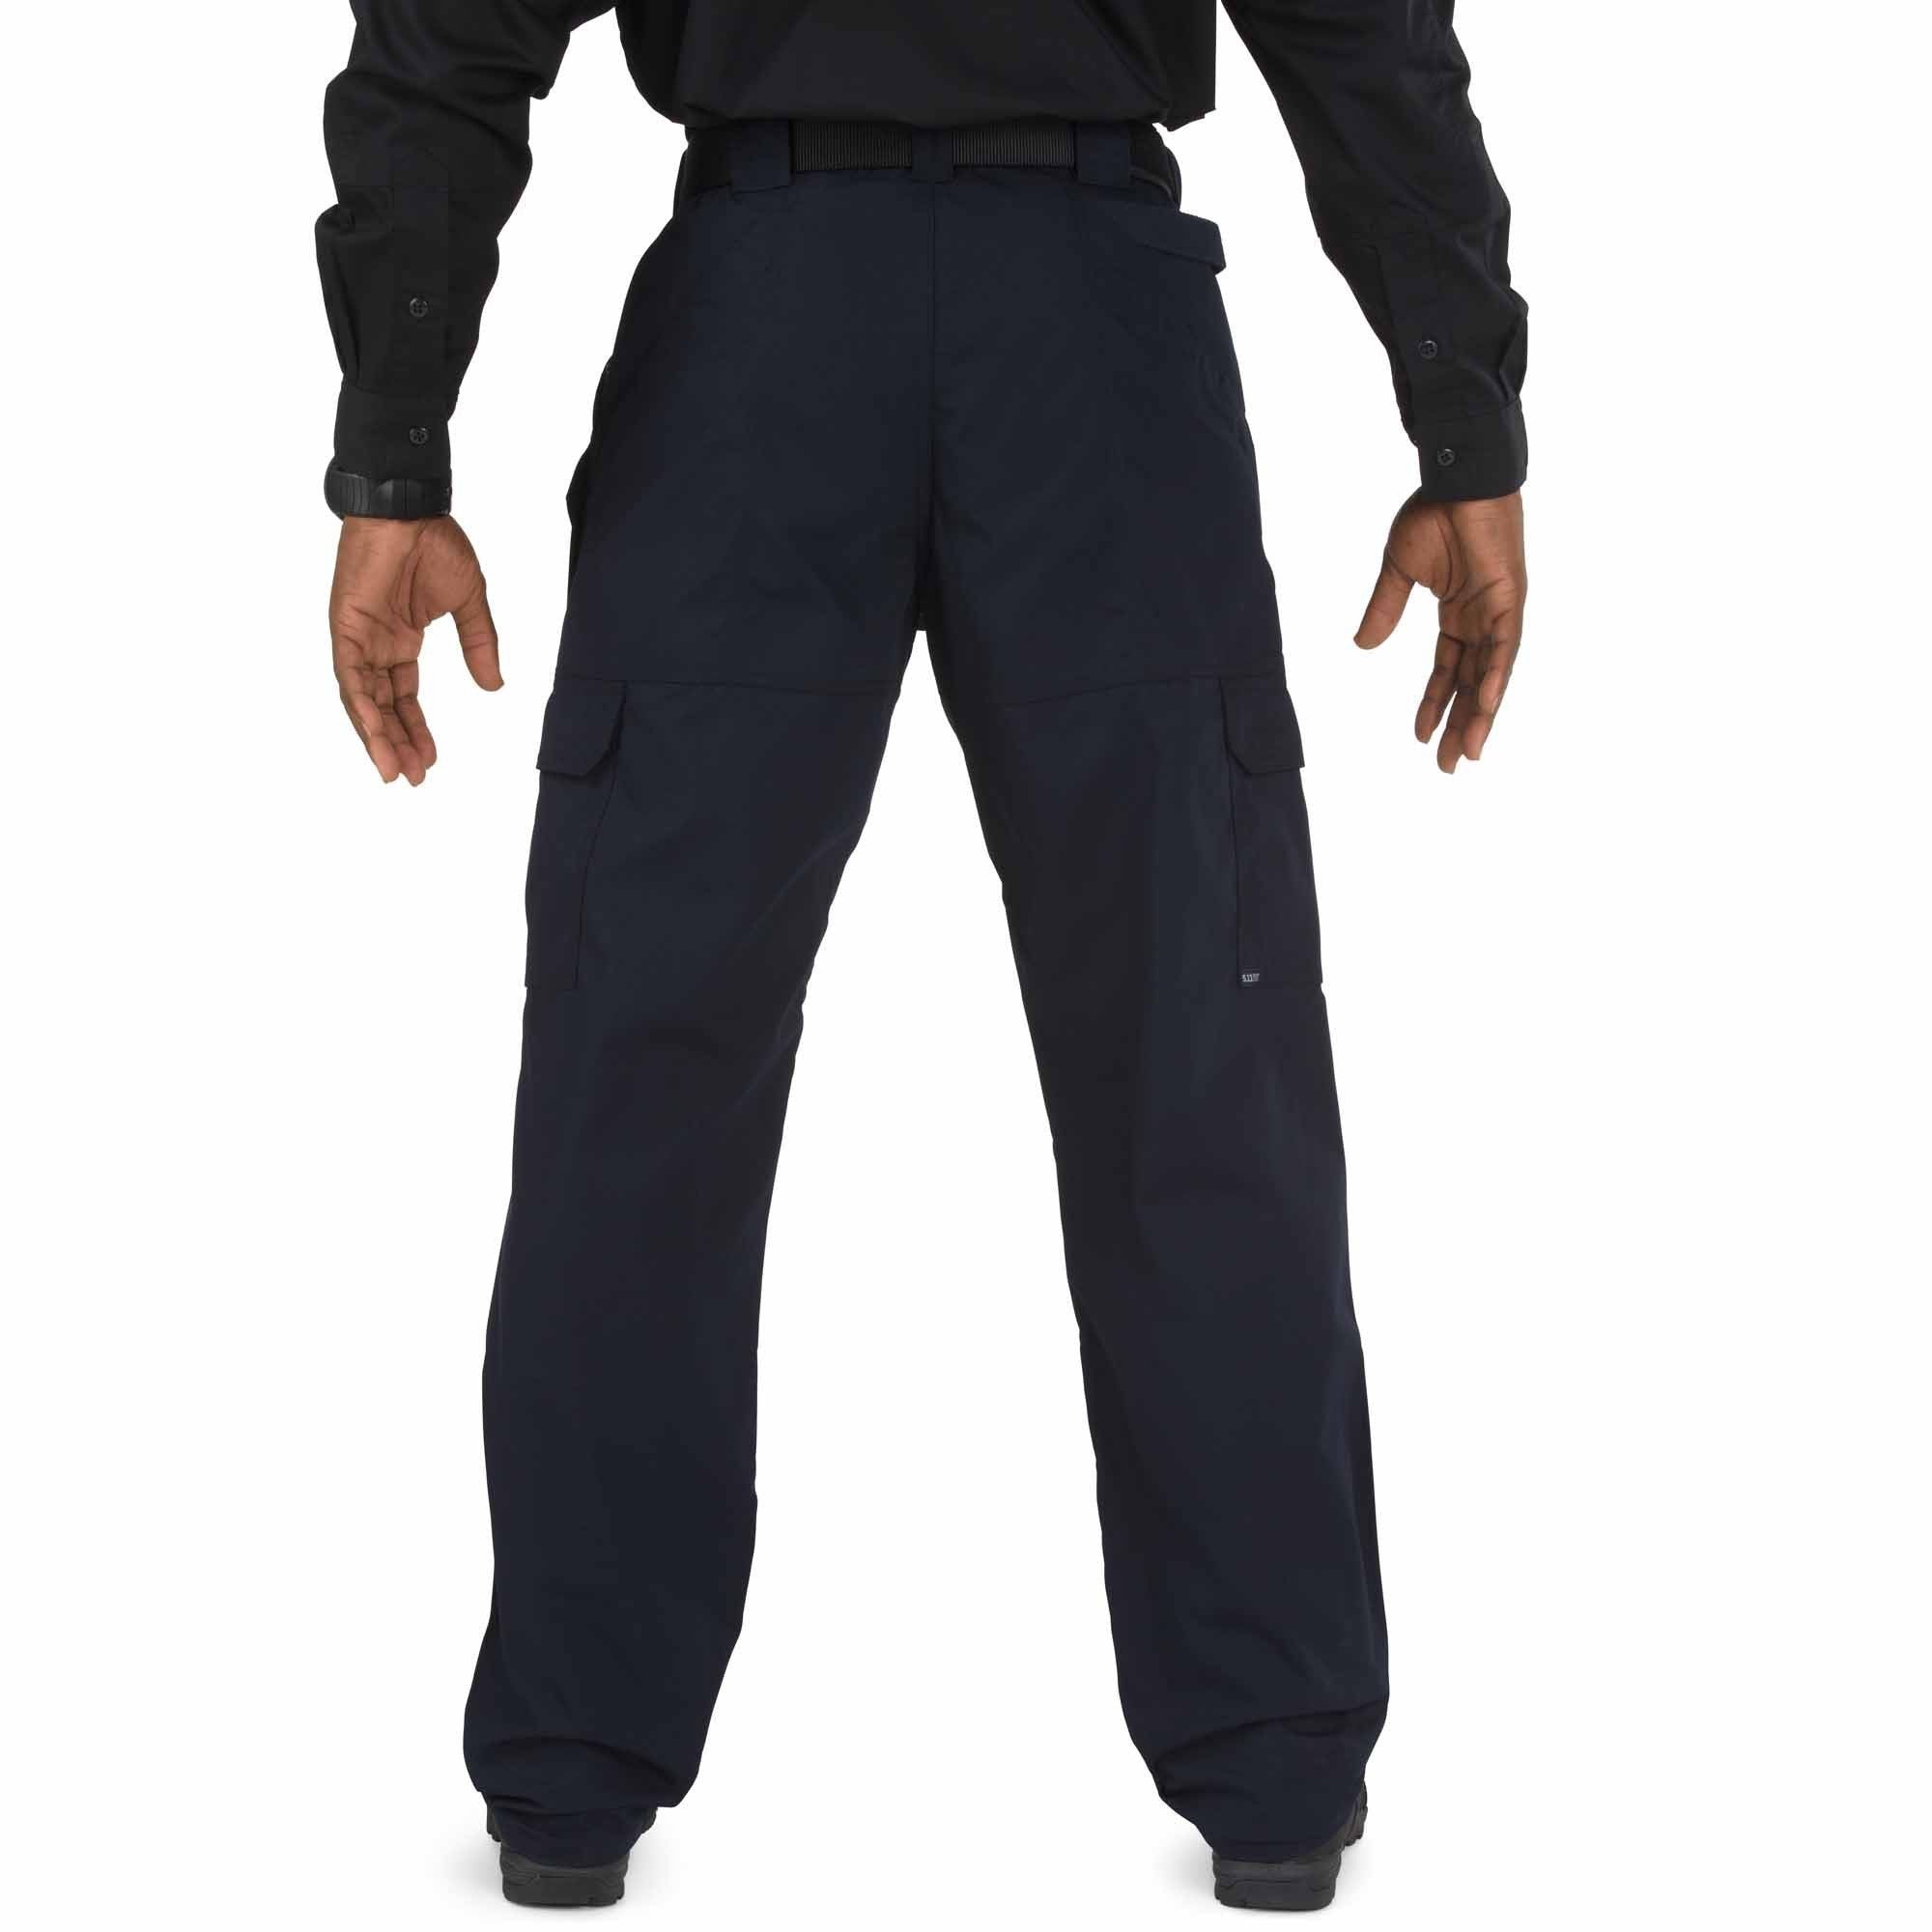 5.11 Tactical Taclite Pro Pants - Dark Navy Pants 5.11 Tactical Tactical Gear Supplier Tactical Distributors Australia